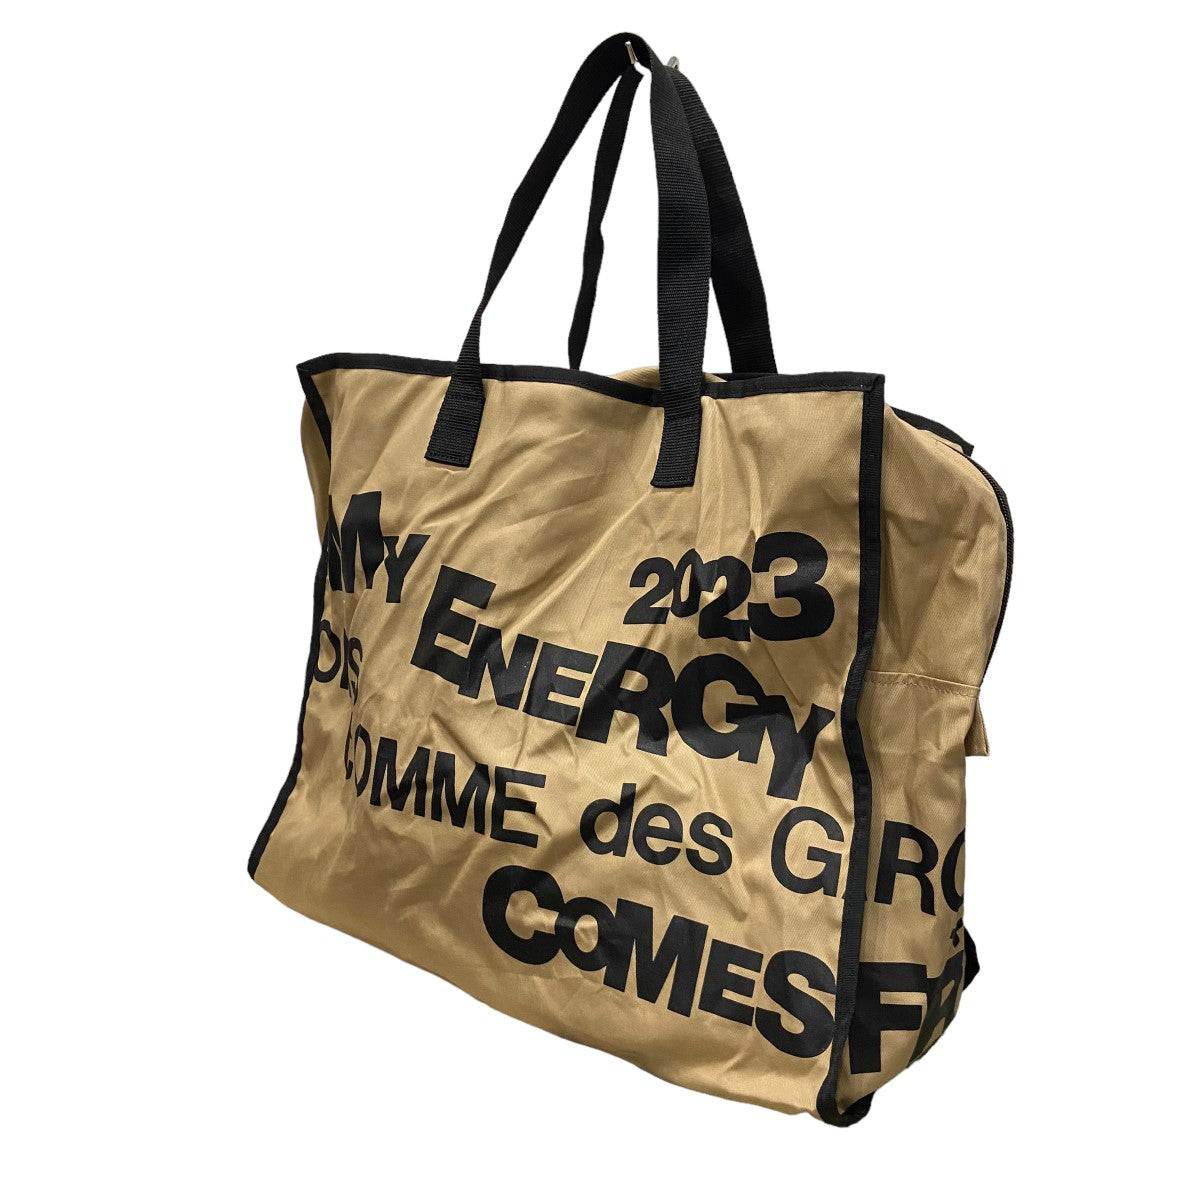 COMME des GARCONS(コムデギャルソン) メッセージショッピングバッグ 